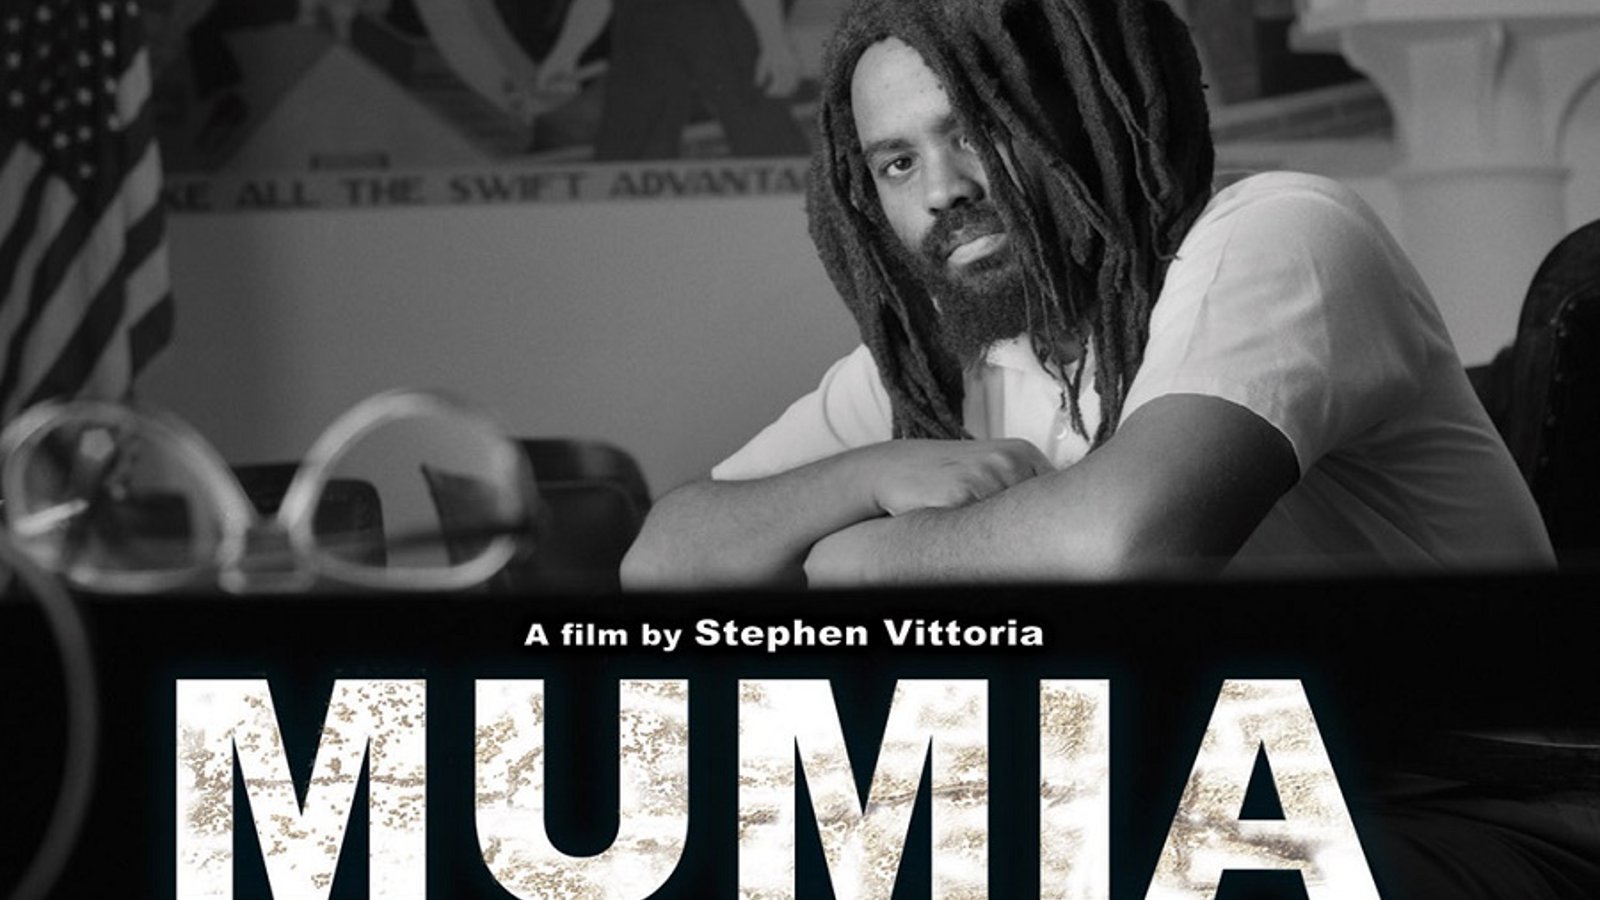 Mumia: Long Distance Revolutionary